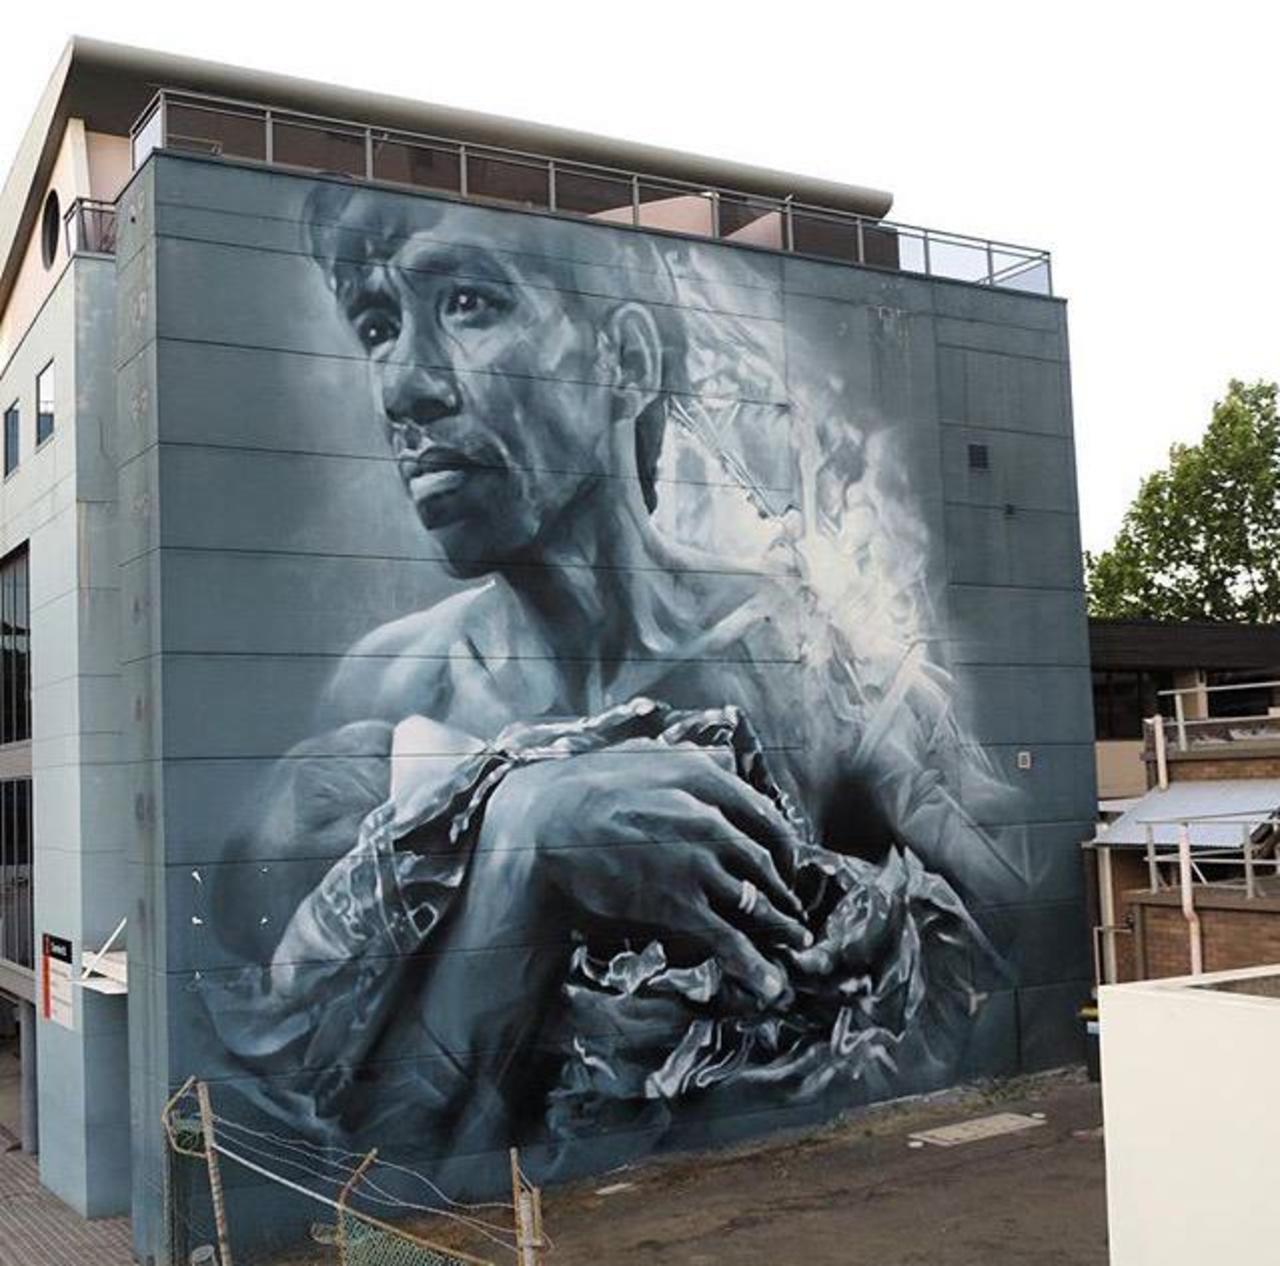 New Street Art by Guido Van Helten in Wollongong Australia 

#art #graffiti #mural #streetart http://t.co/317joeoJwf